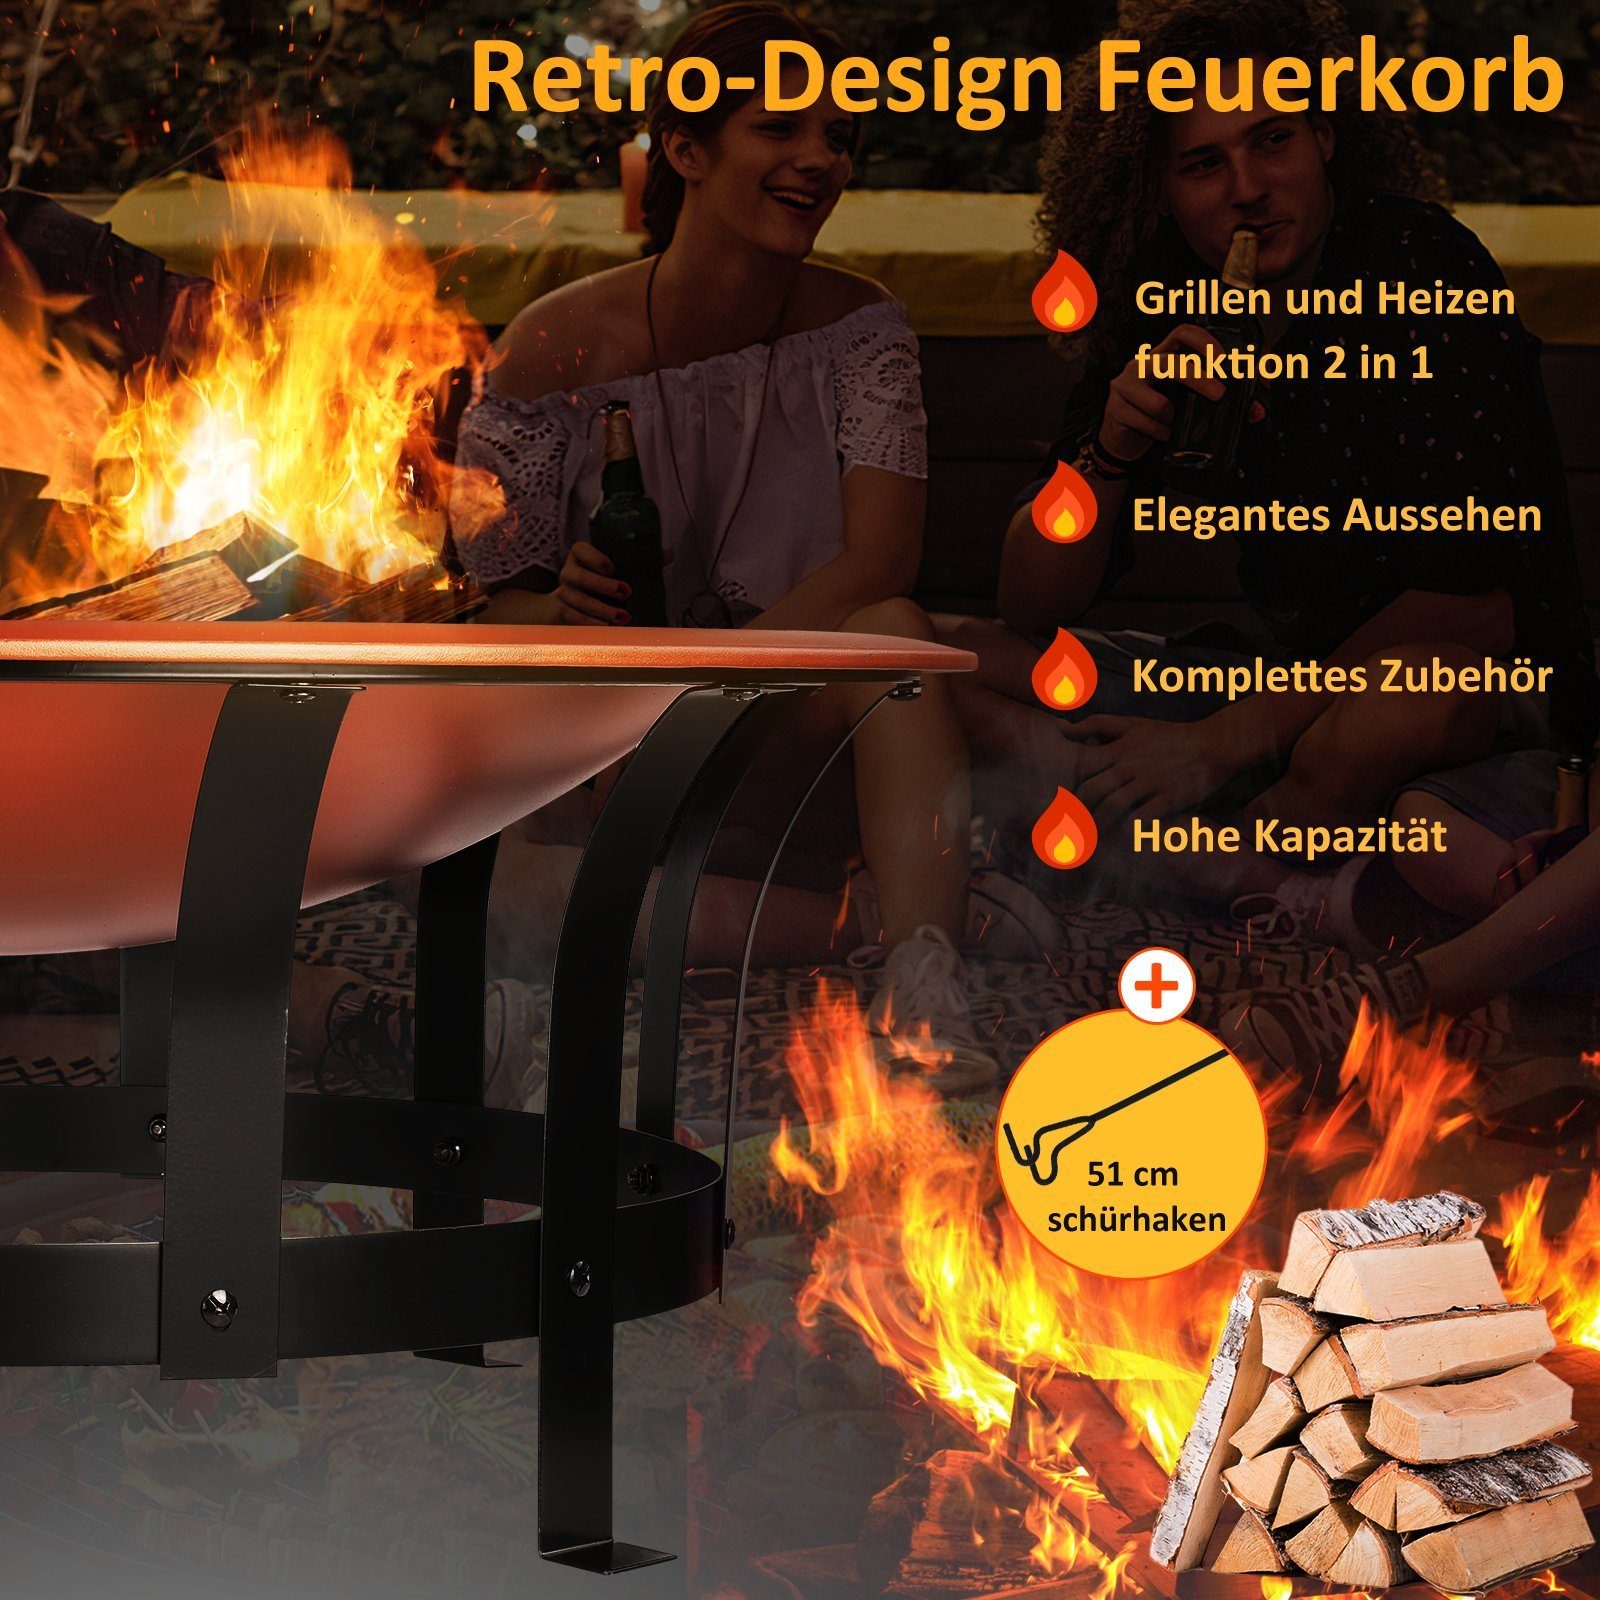 TLGREEN Feuerschale, Ø 76cm Kupferfarbe Feuerkorb, Retro-Design Feuerkorb, mit Funkenschutz&Grillrost